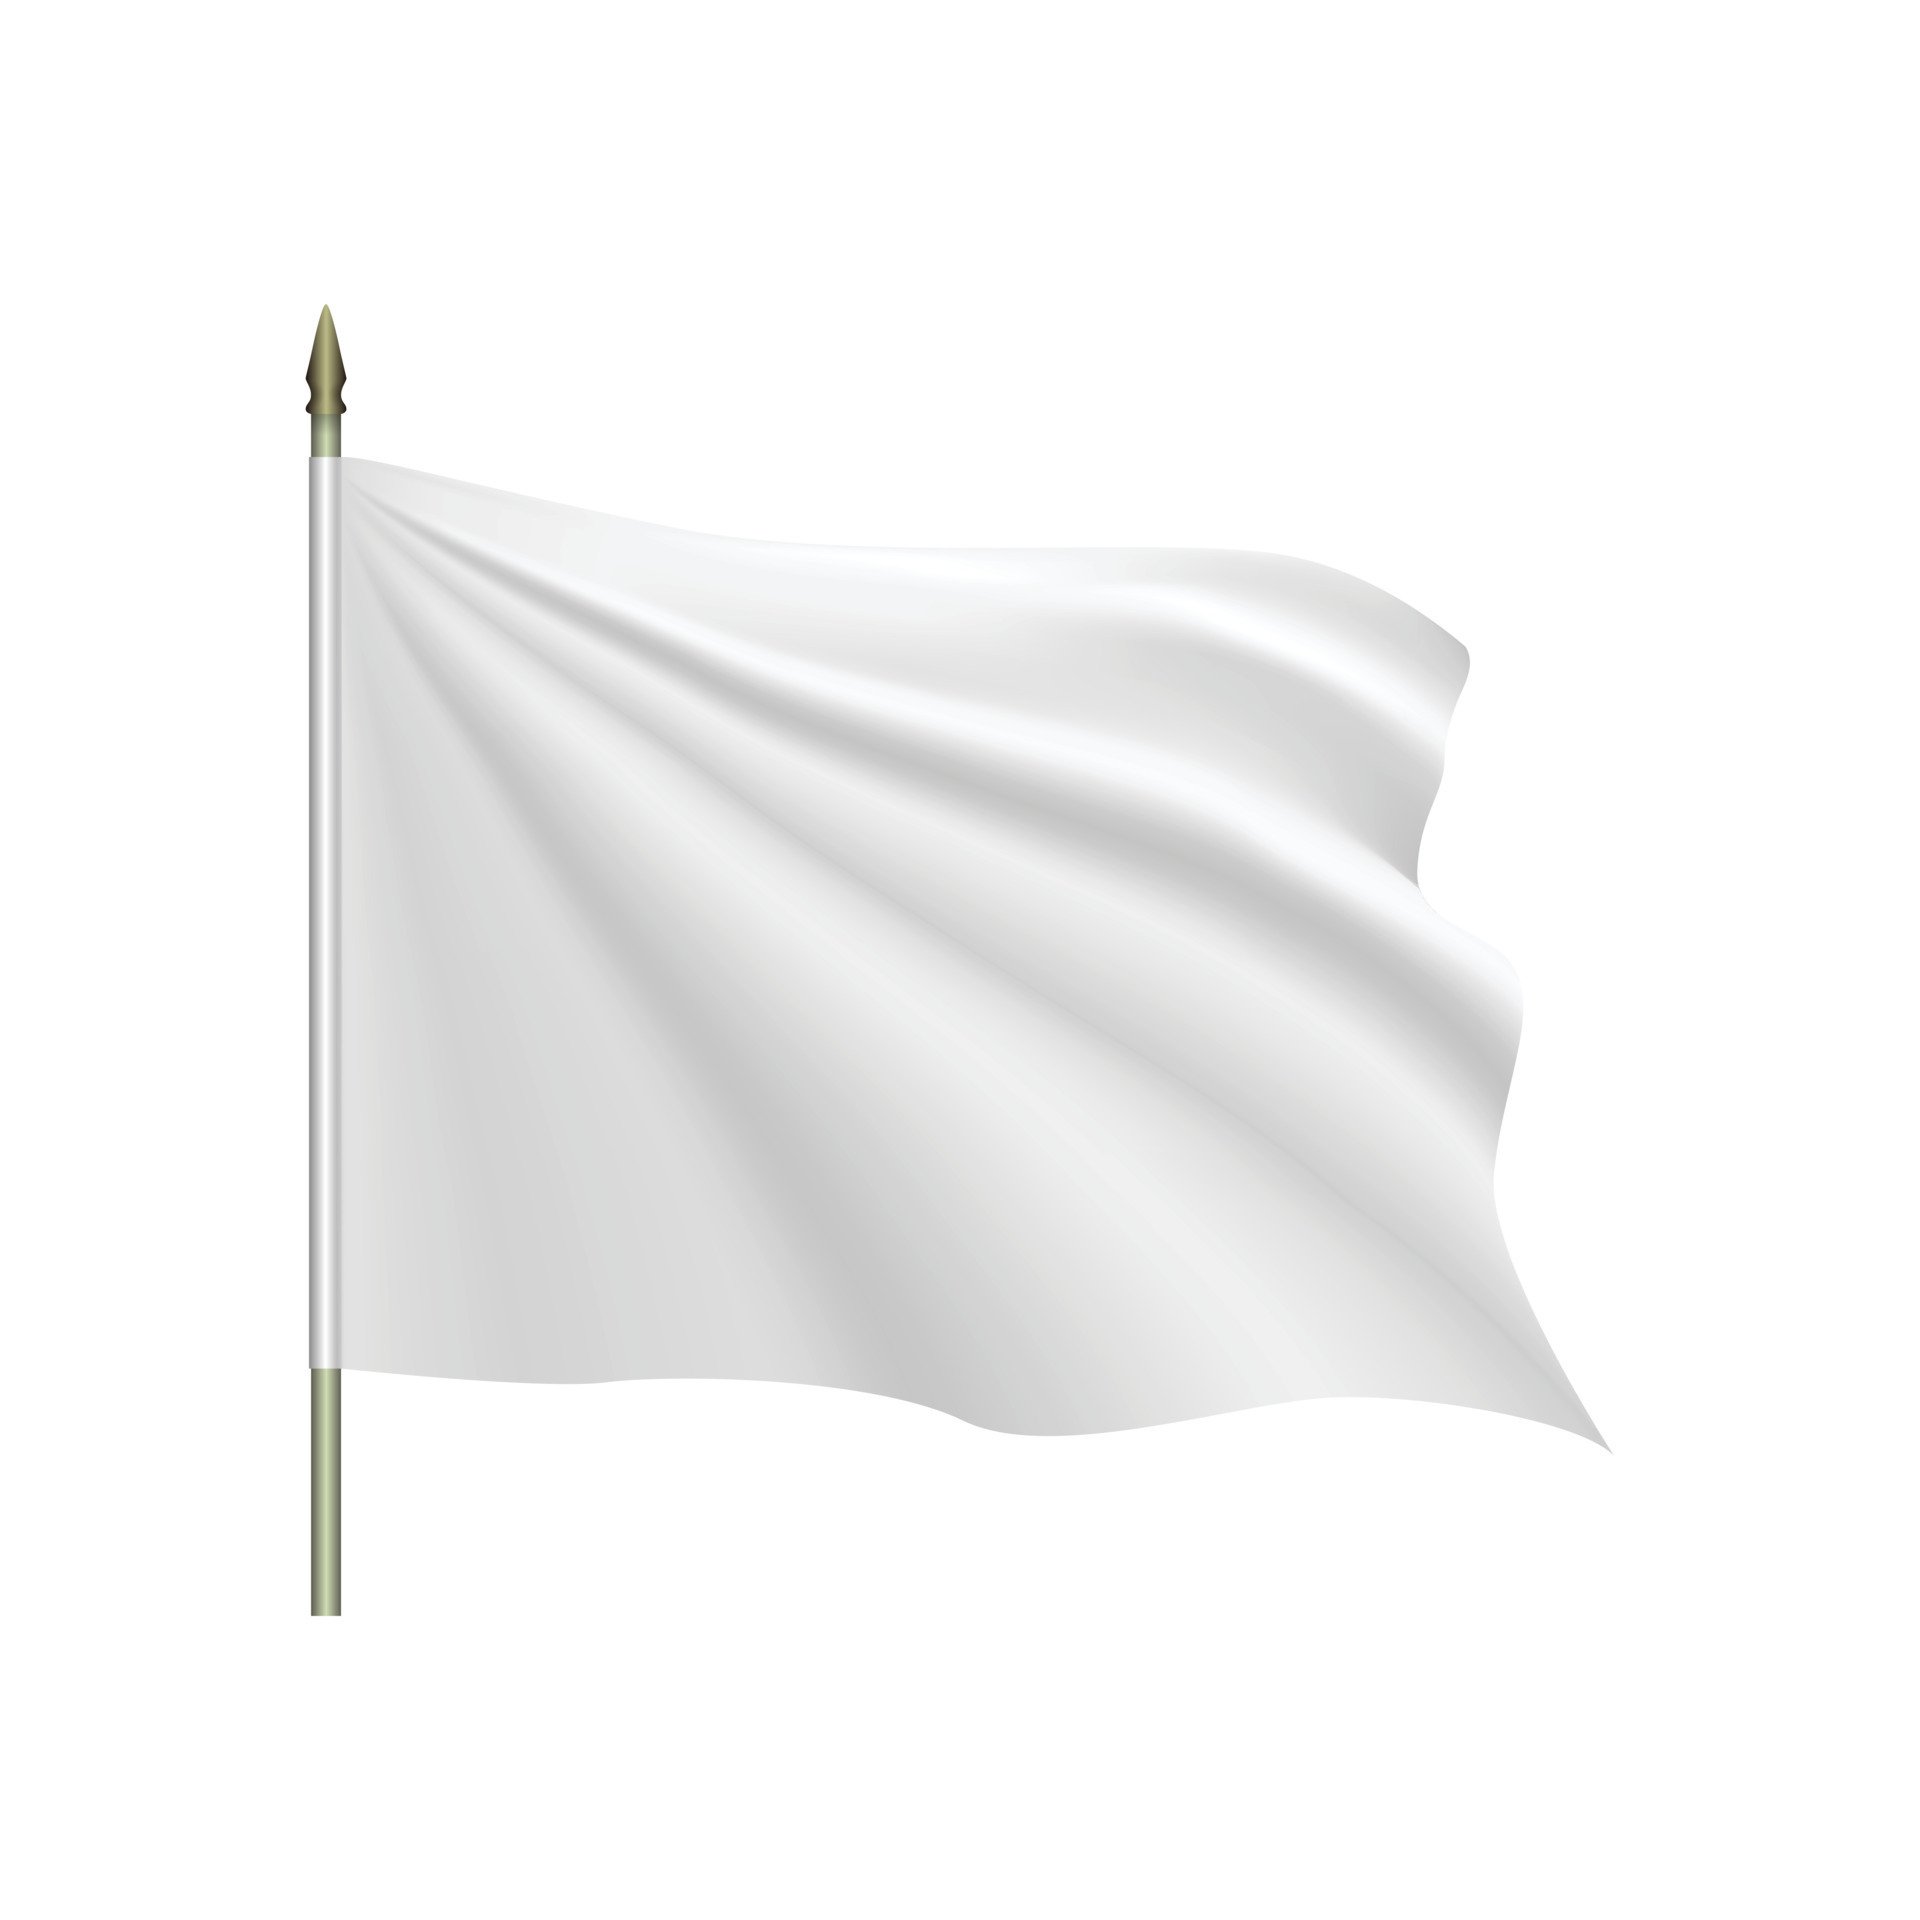 Картинка белый флаг. Белые флаги. Флагшток белый. Флажок белый. Развивающийся белый флаг.